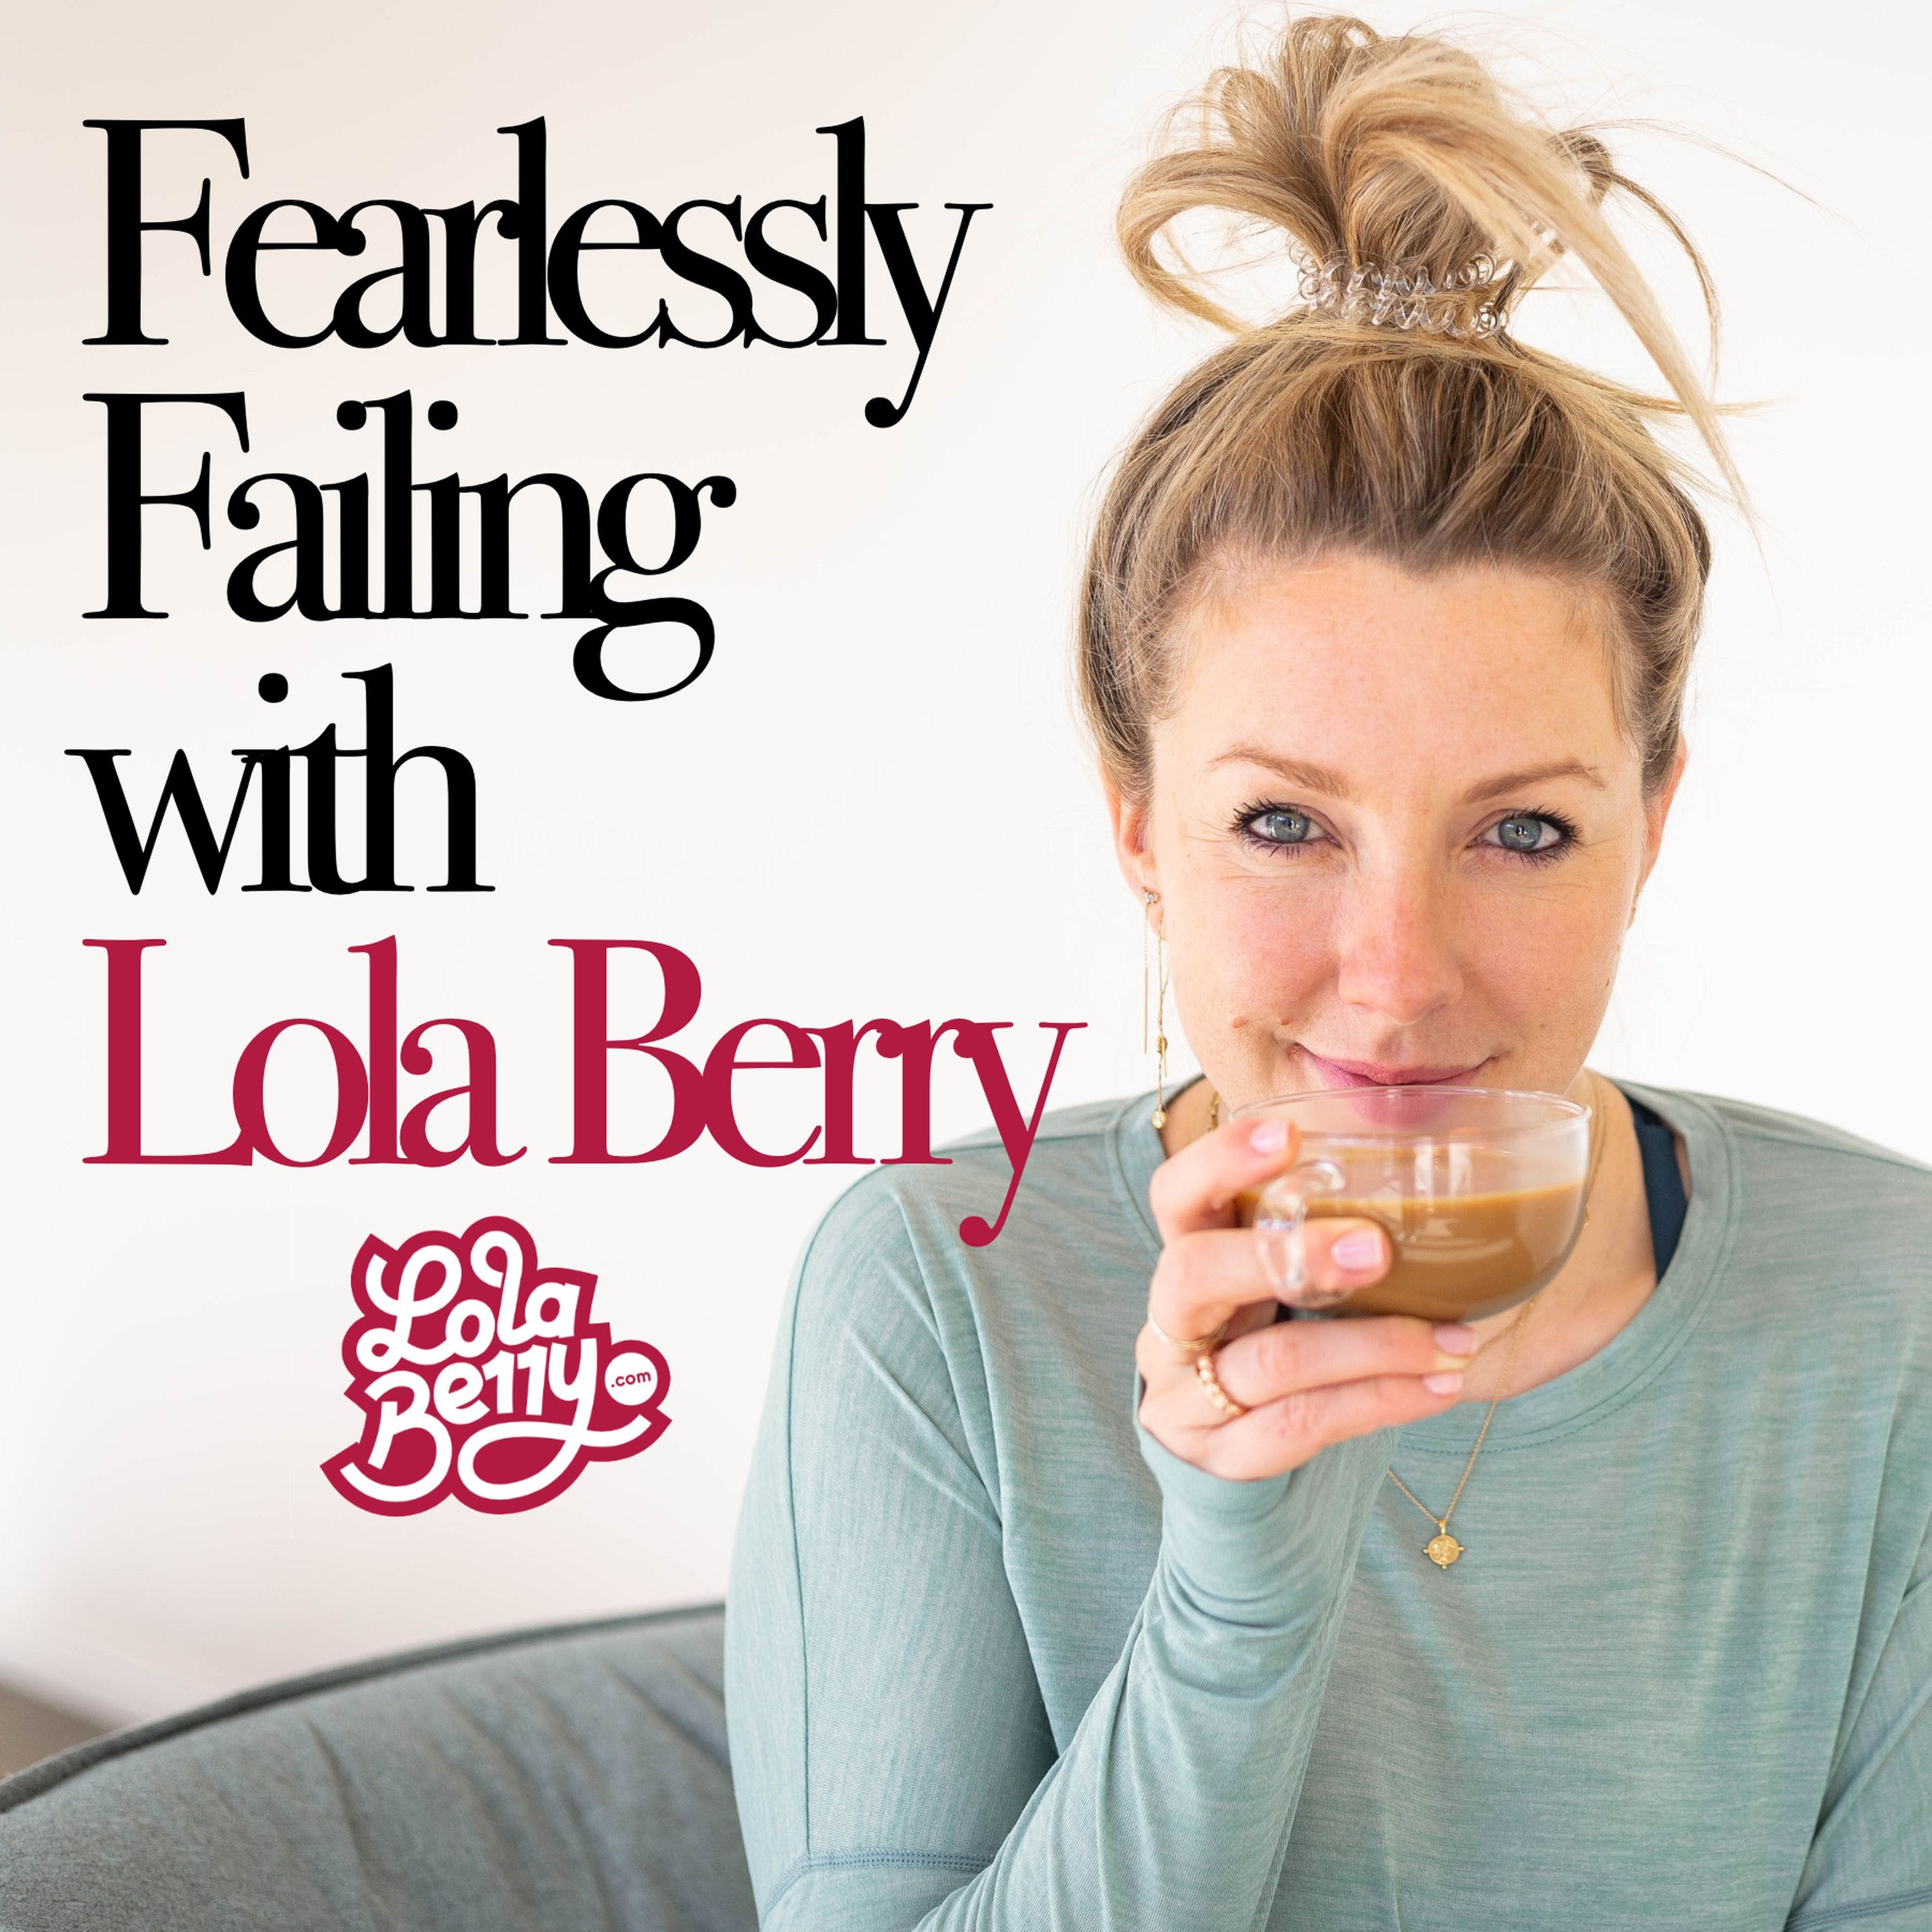 64. Fearlessly Failing: Elle Ferguson